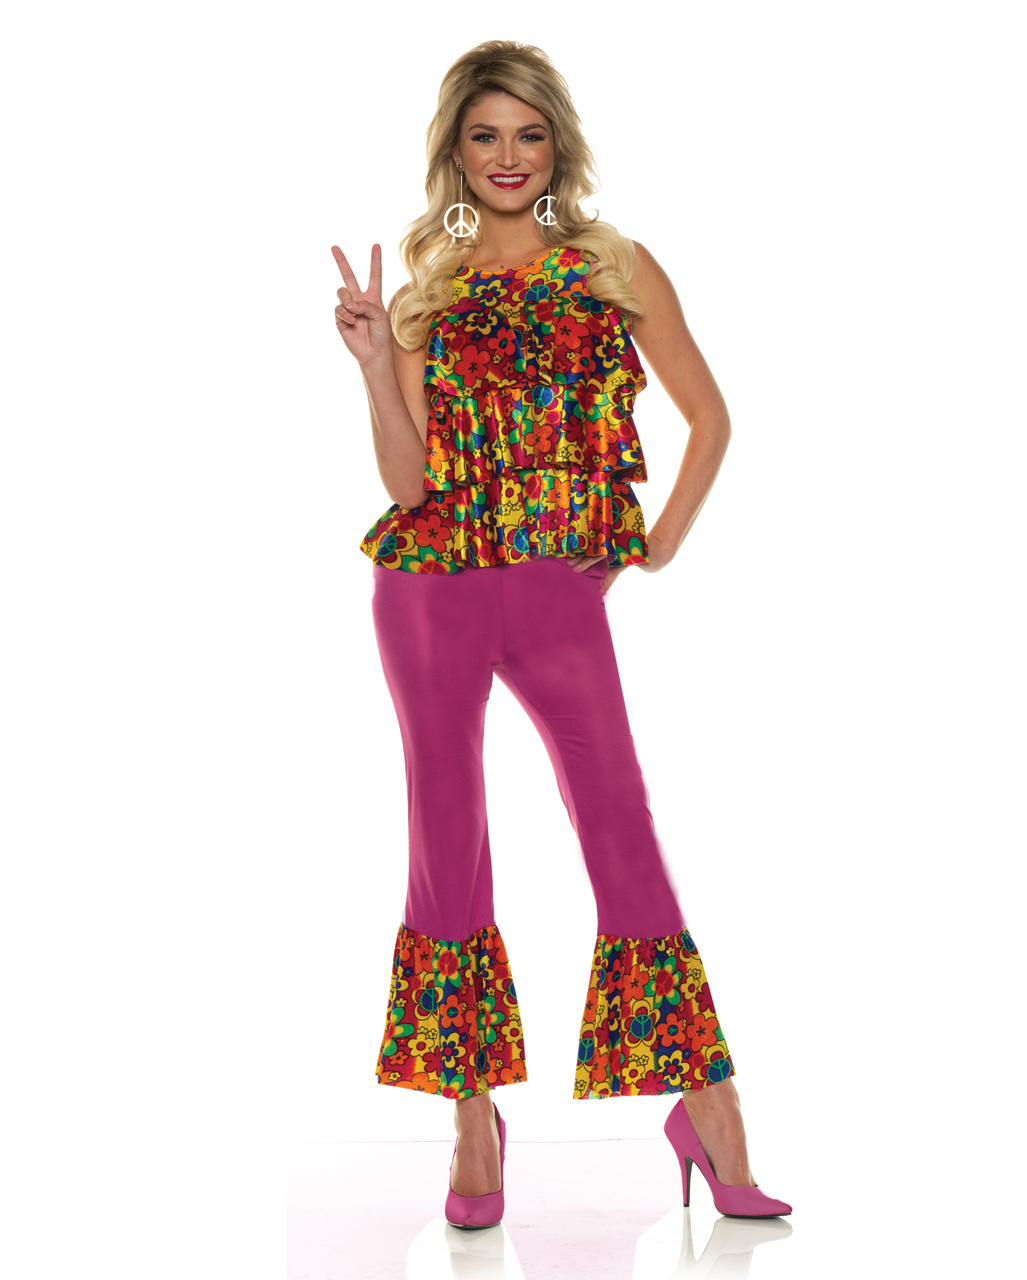 Bell Bottoms Flared Pants Adult 60s 70s Hippie Costume Halloween Fancy Dress